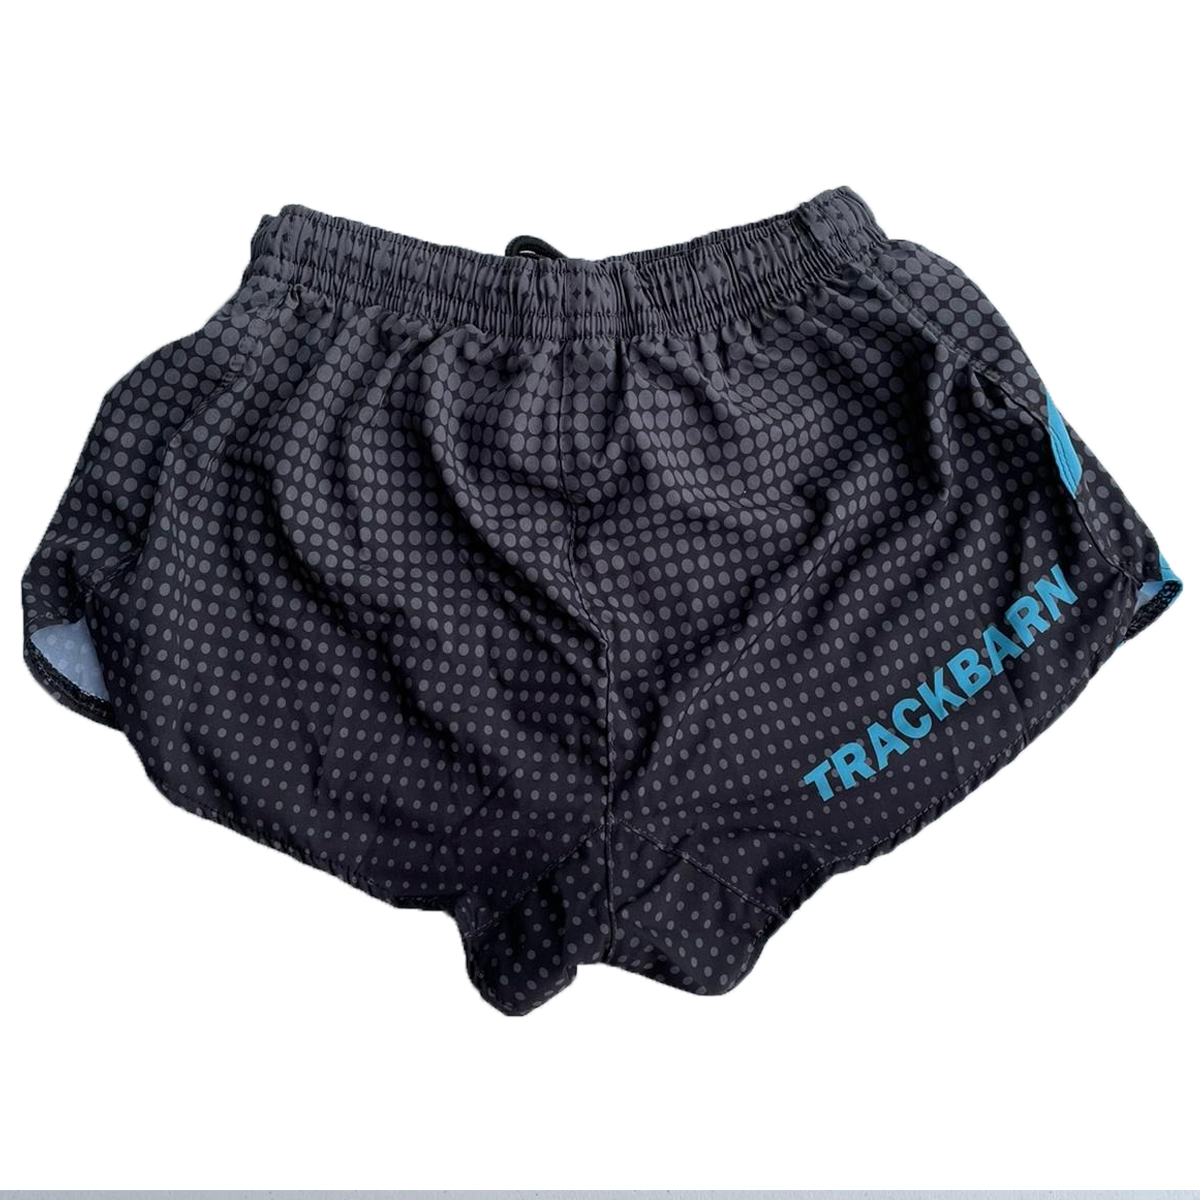 Split Shorts with Blue Logo